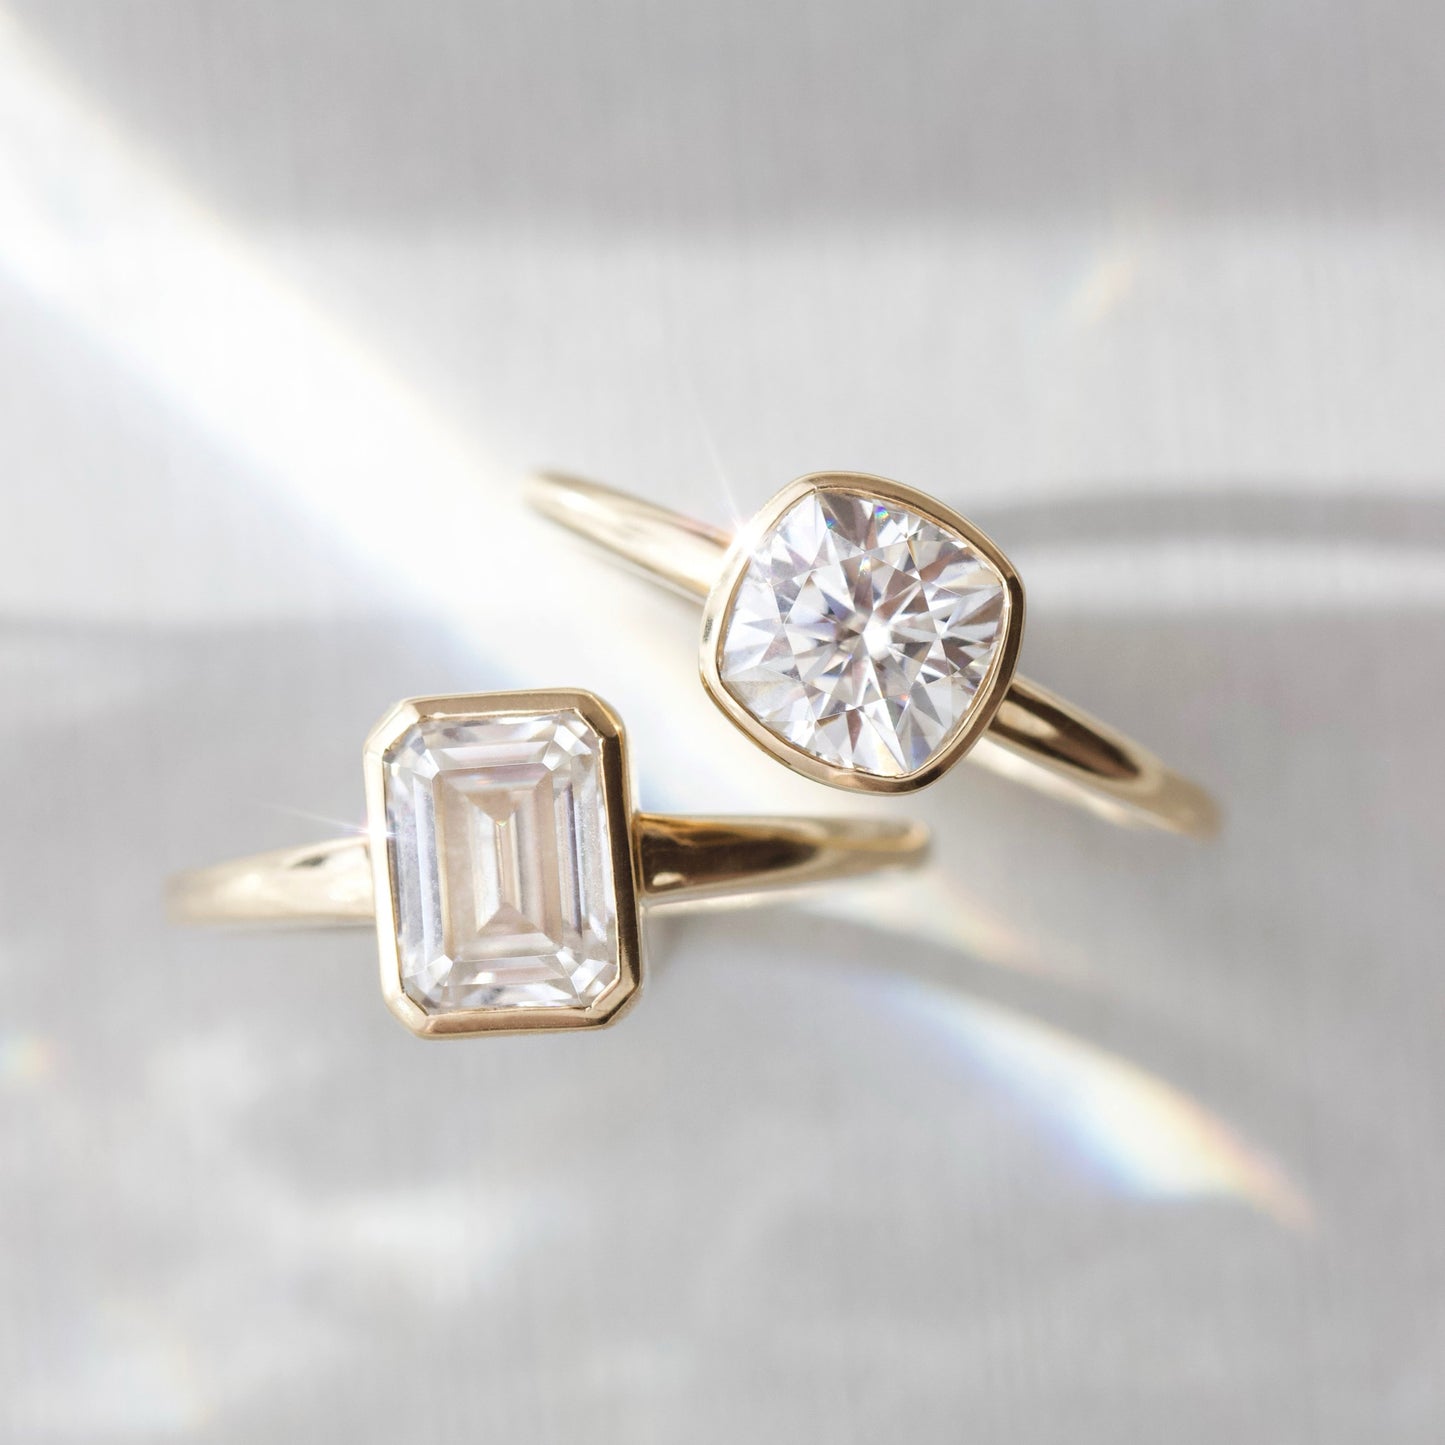 Carrie Elizabeth moissanite engagement ring in solid 9k gold